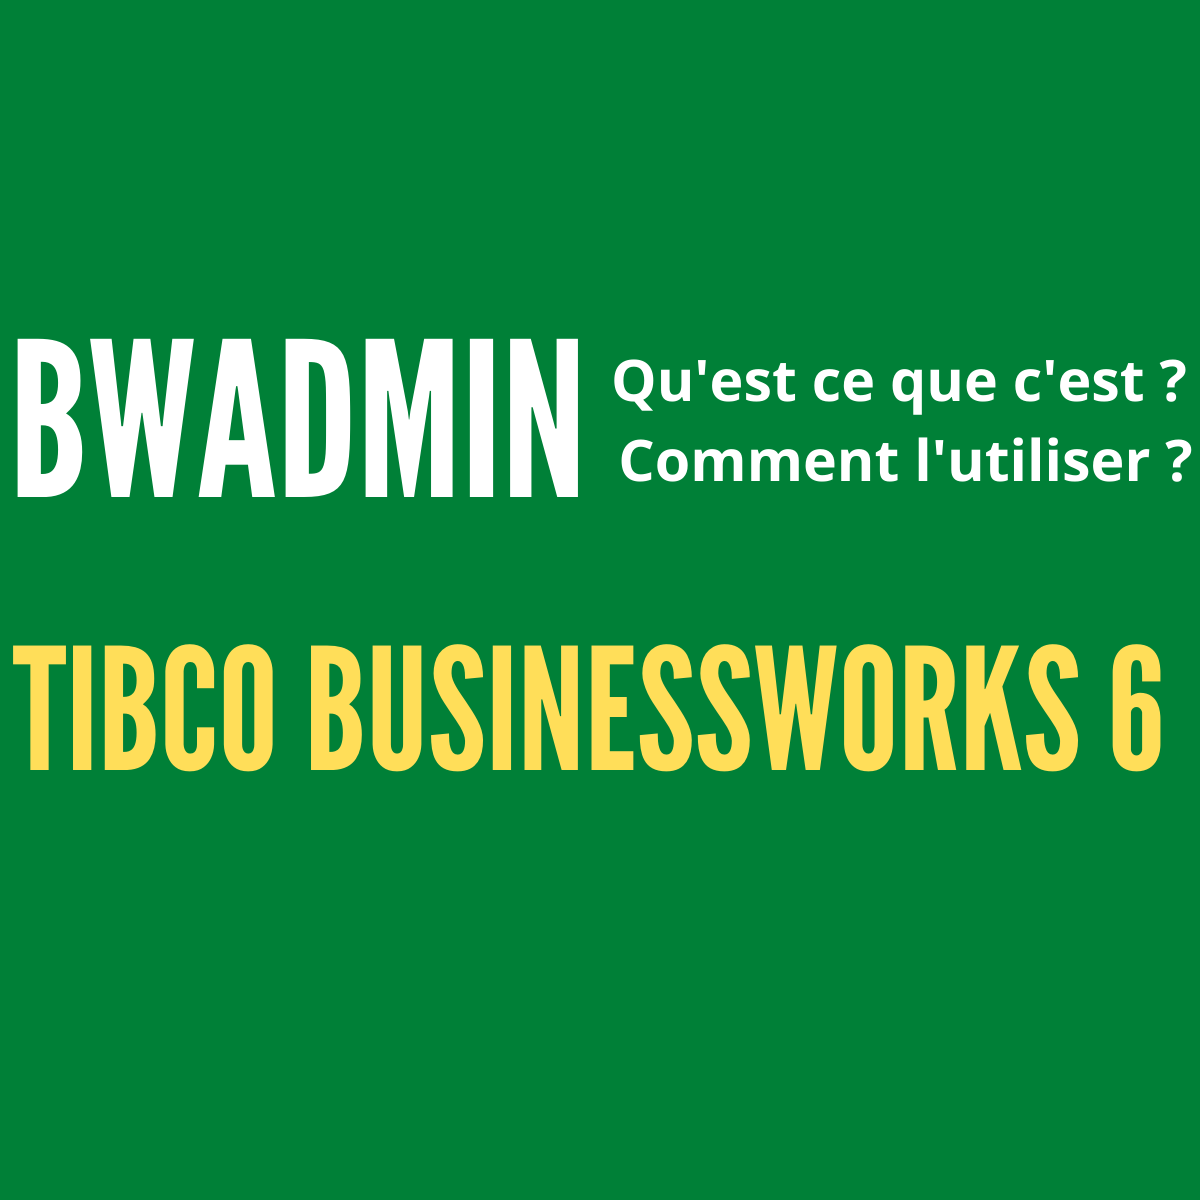 tibco-bwadmin-tibco-businessworks-bw-6-miaffo-net